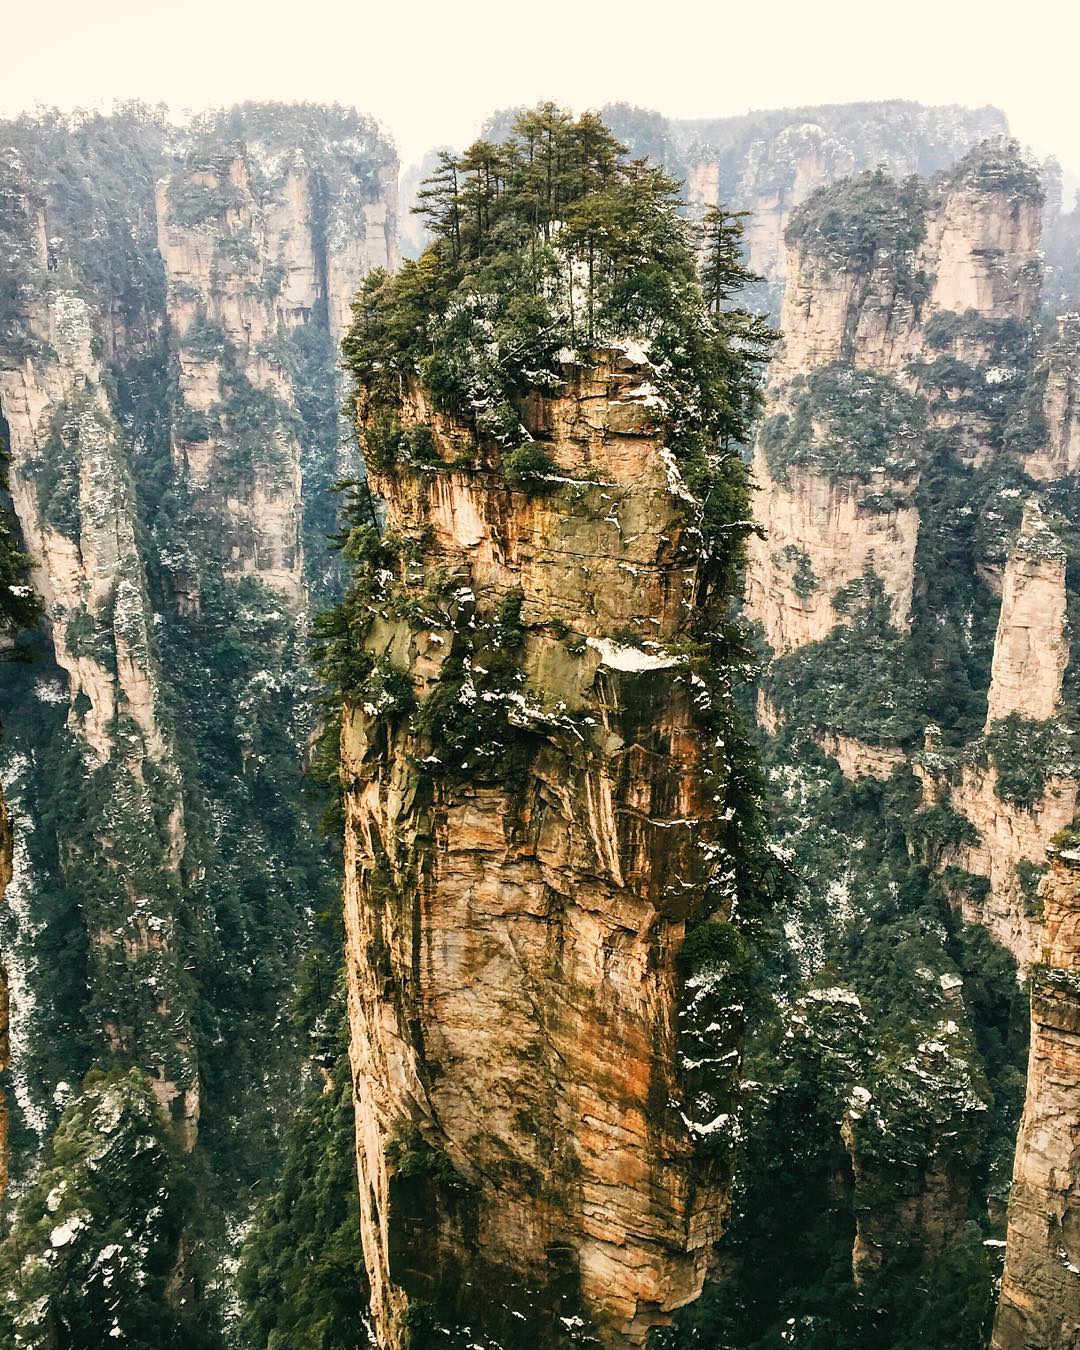  The "Avatar Mountains" in Zhangjiajie, China 